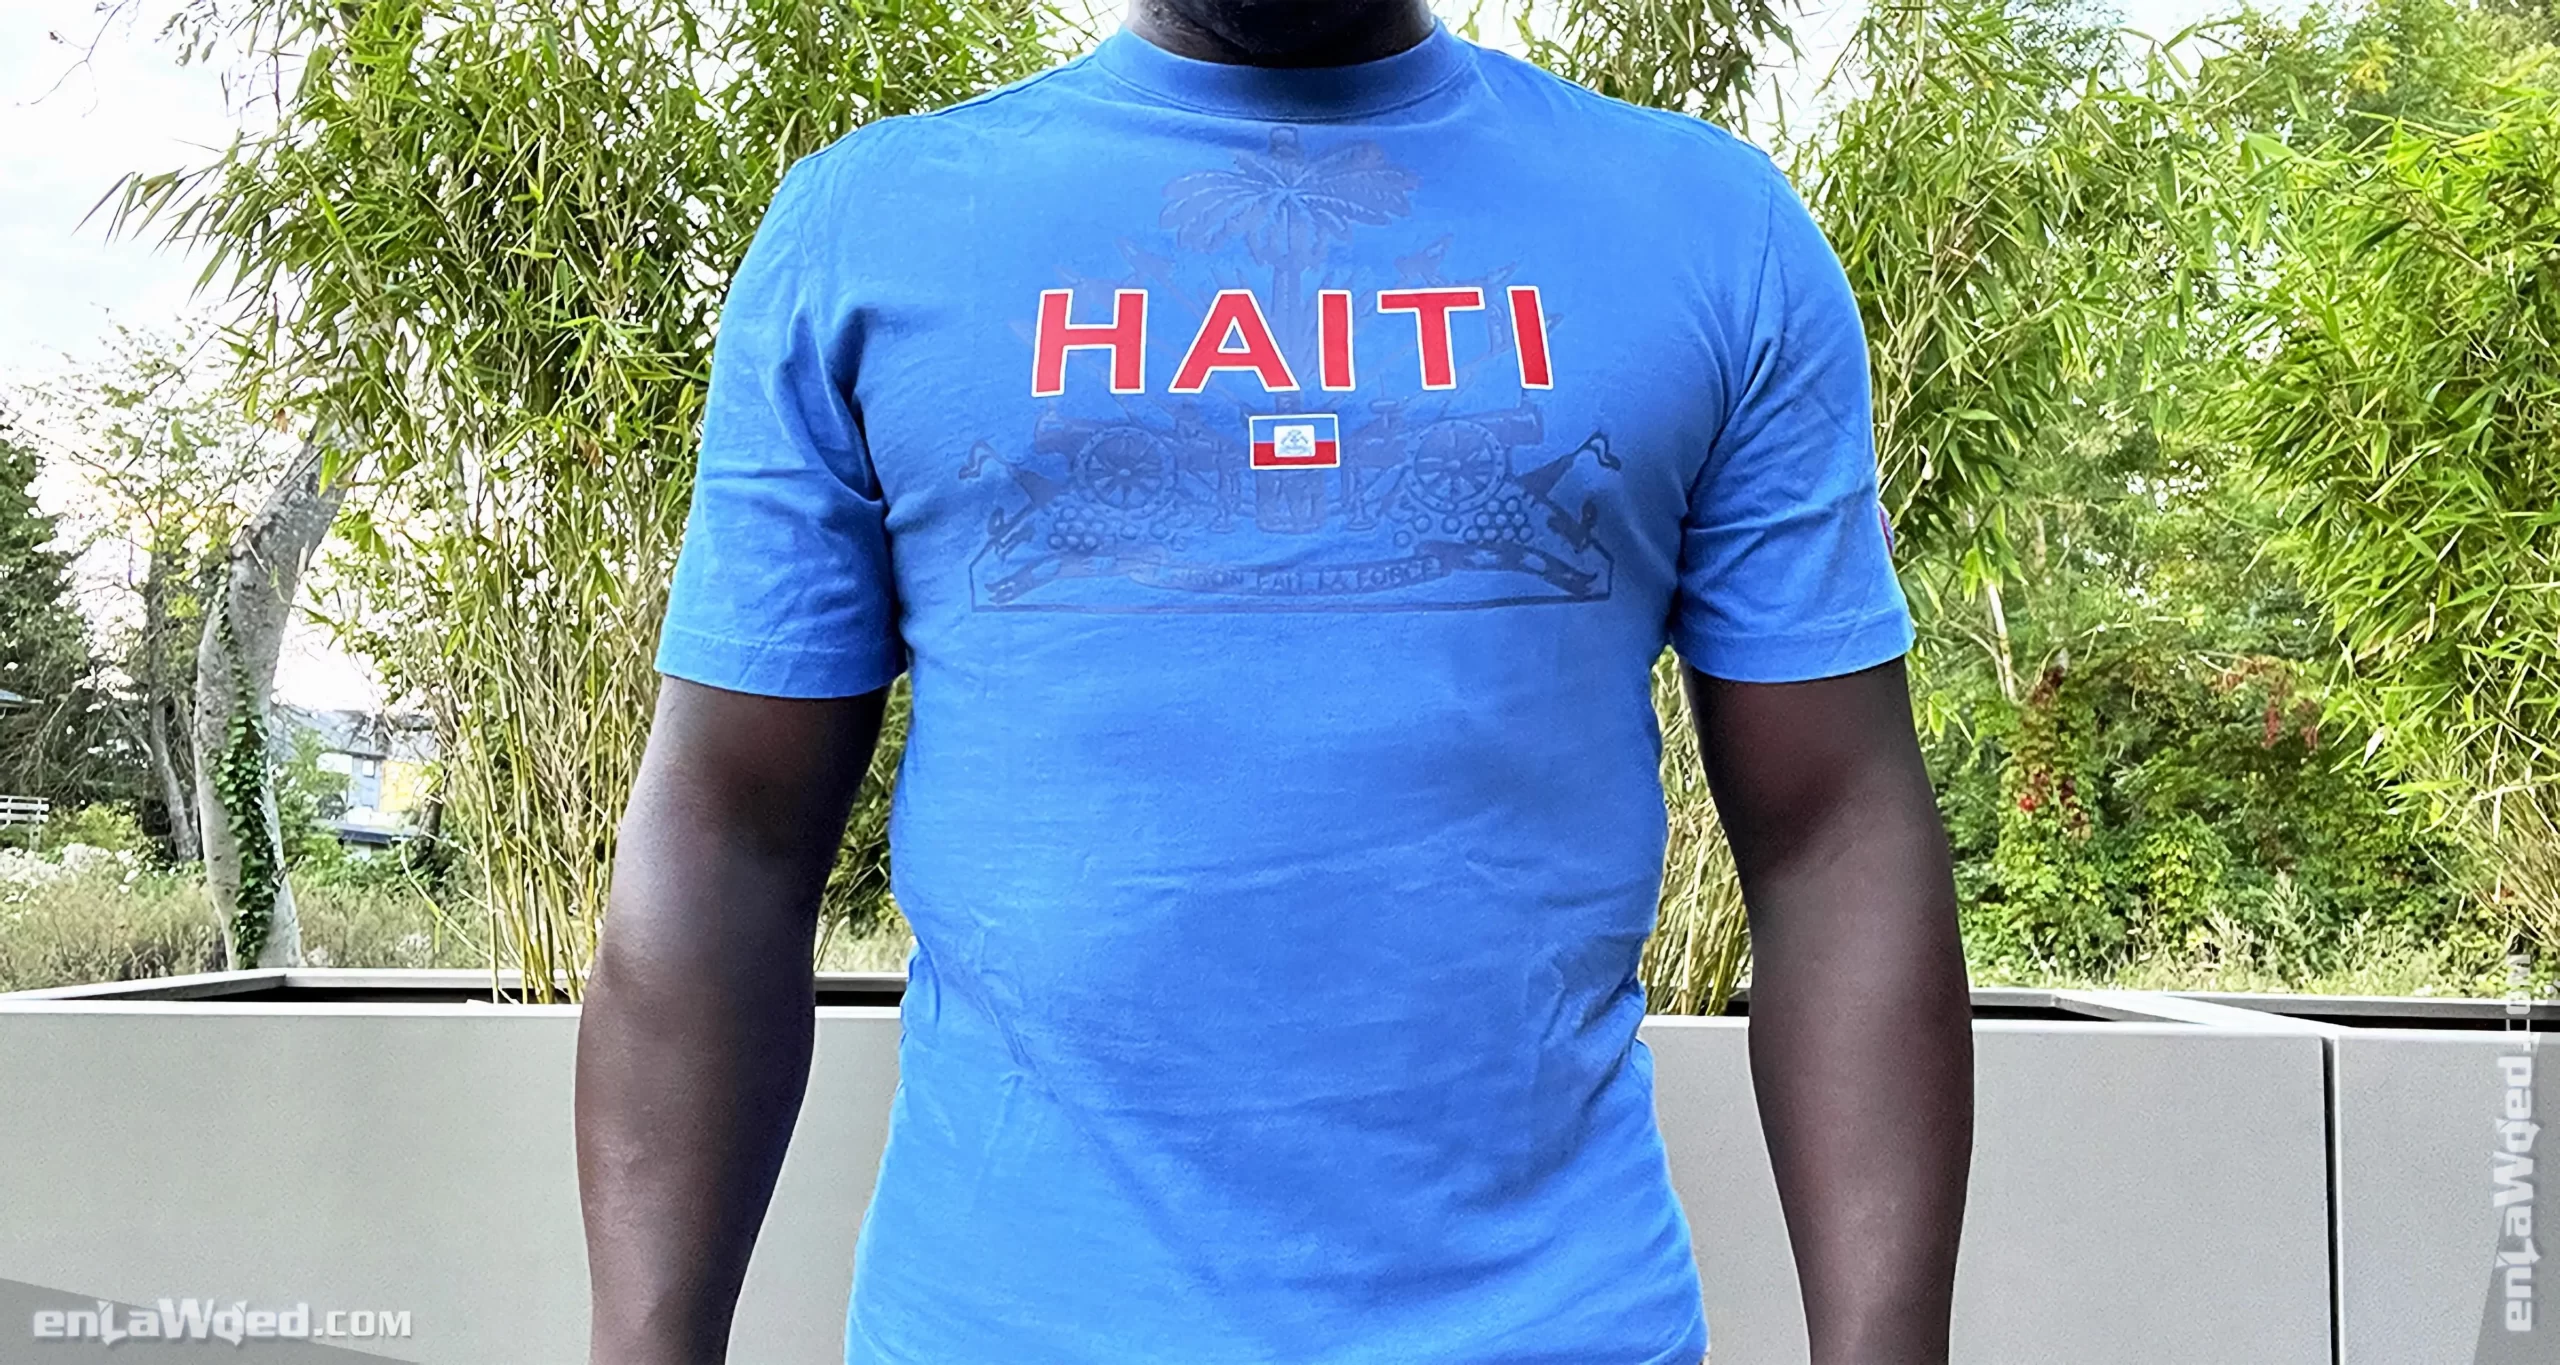 Men’s 2007 Haiti T-Shirt by Adidas Originals: Uplifted (EnLawded.com file #lp1n85541261945e68t1thoti)